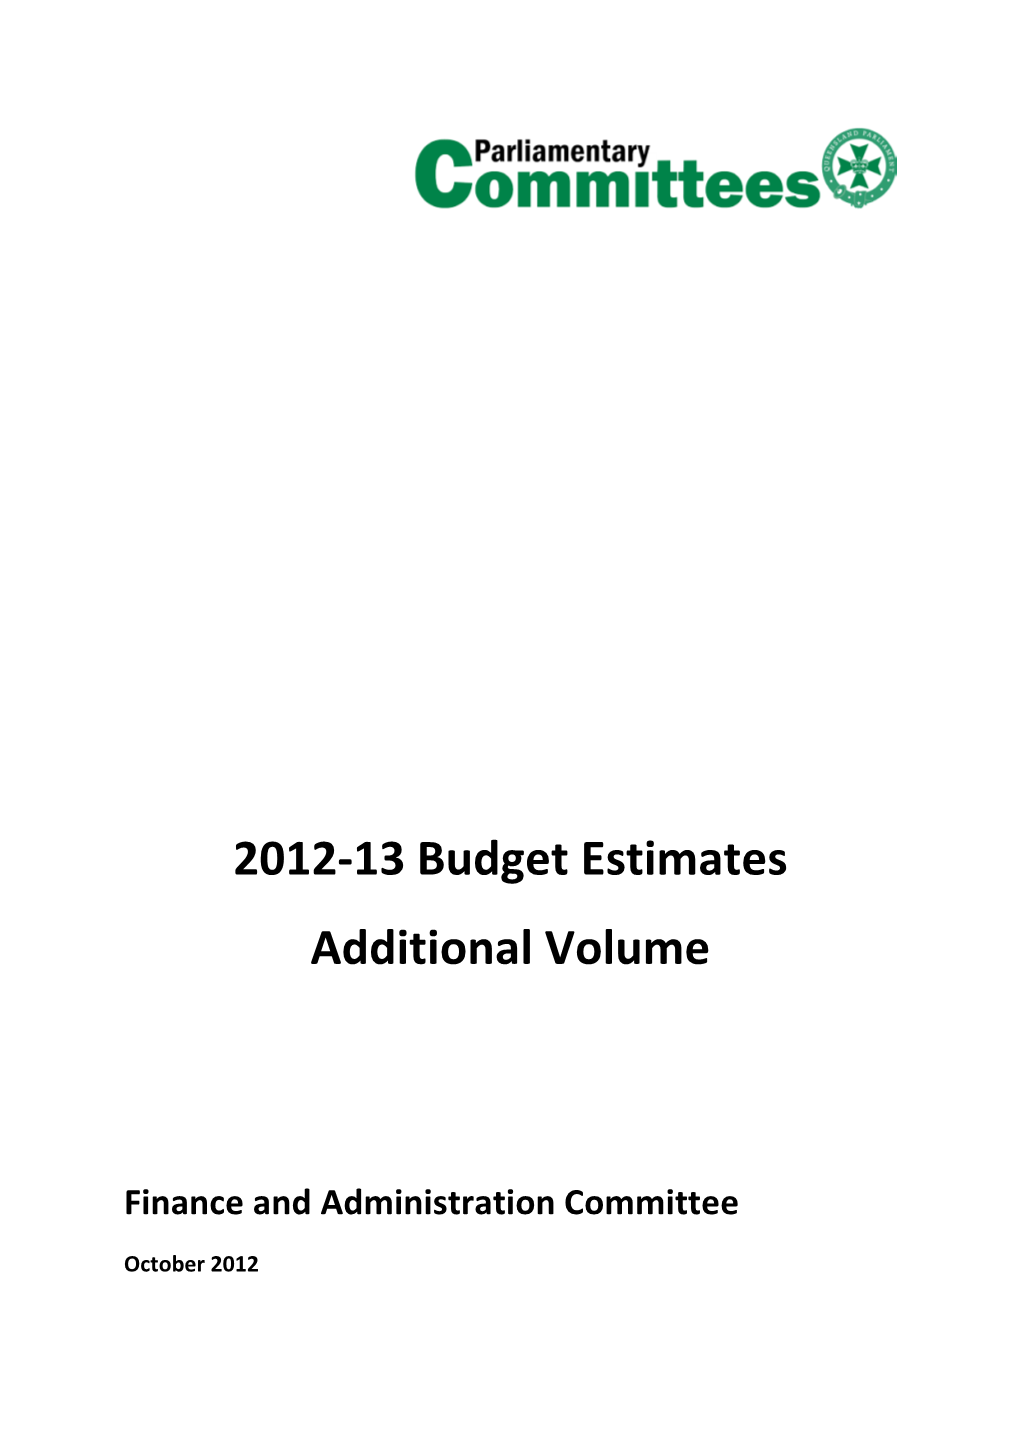 2012-13 Budget Estimates Additional Volume